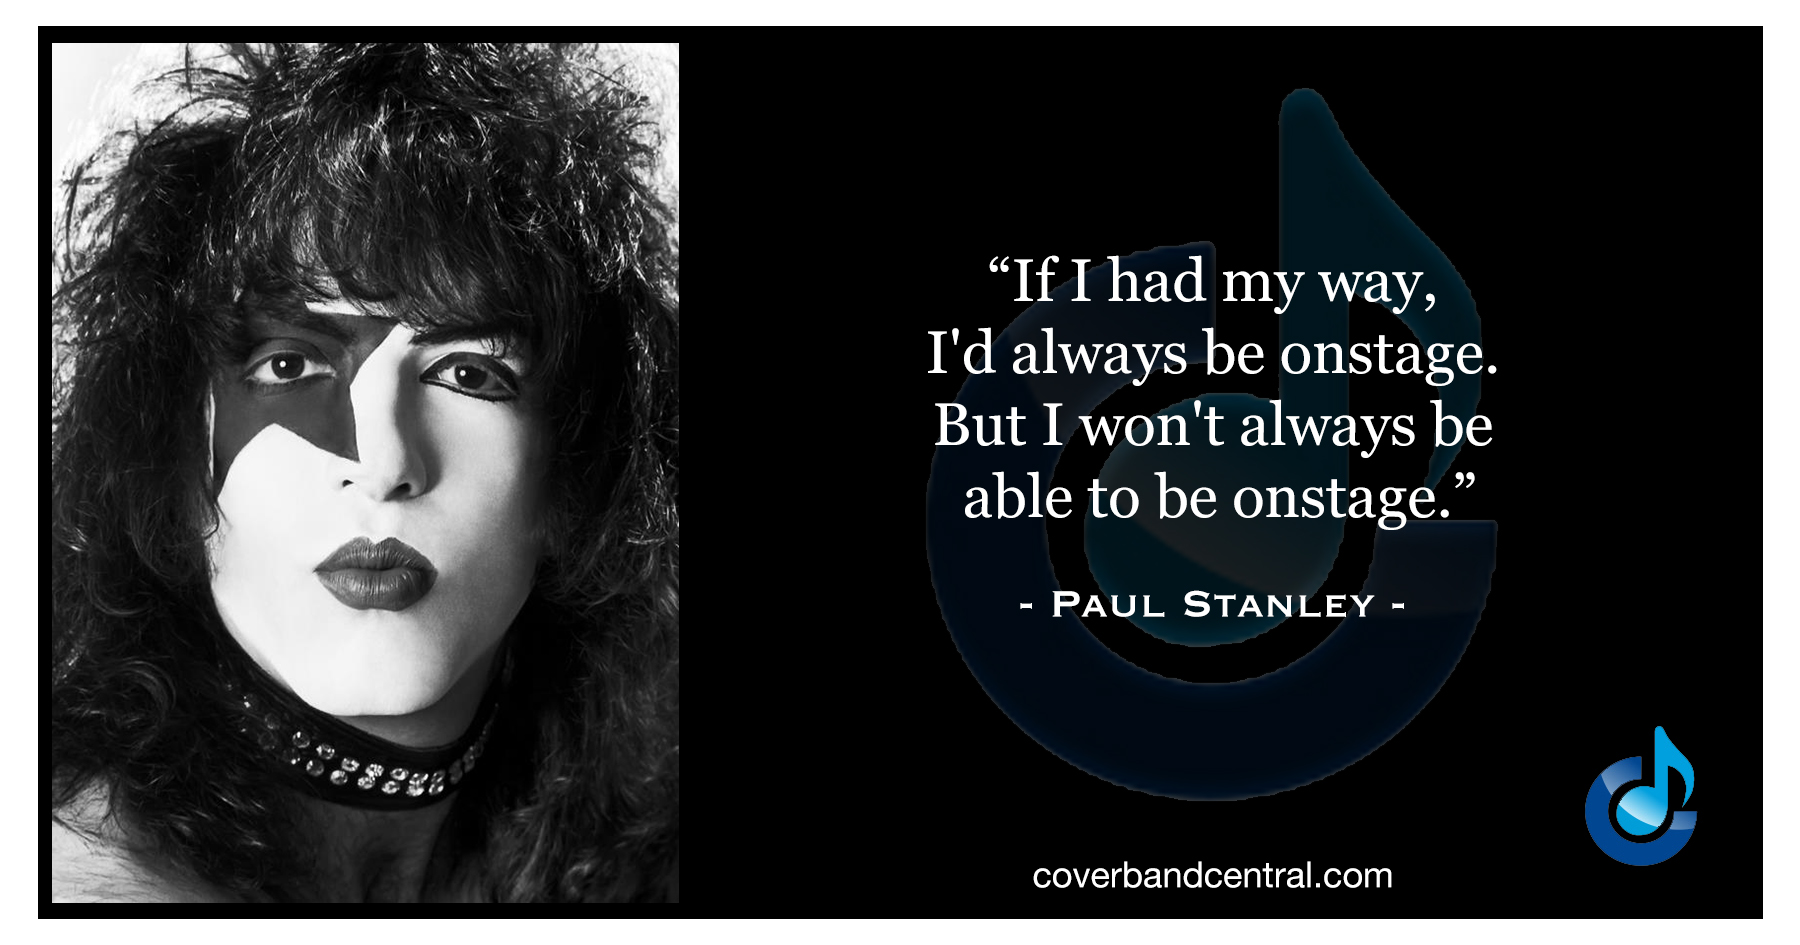 Paul Stanley quote